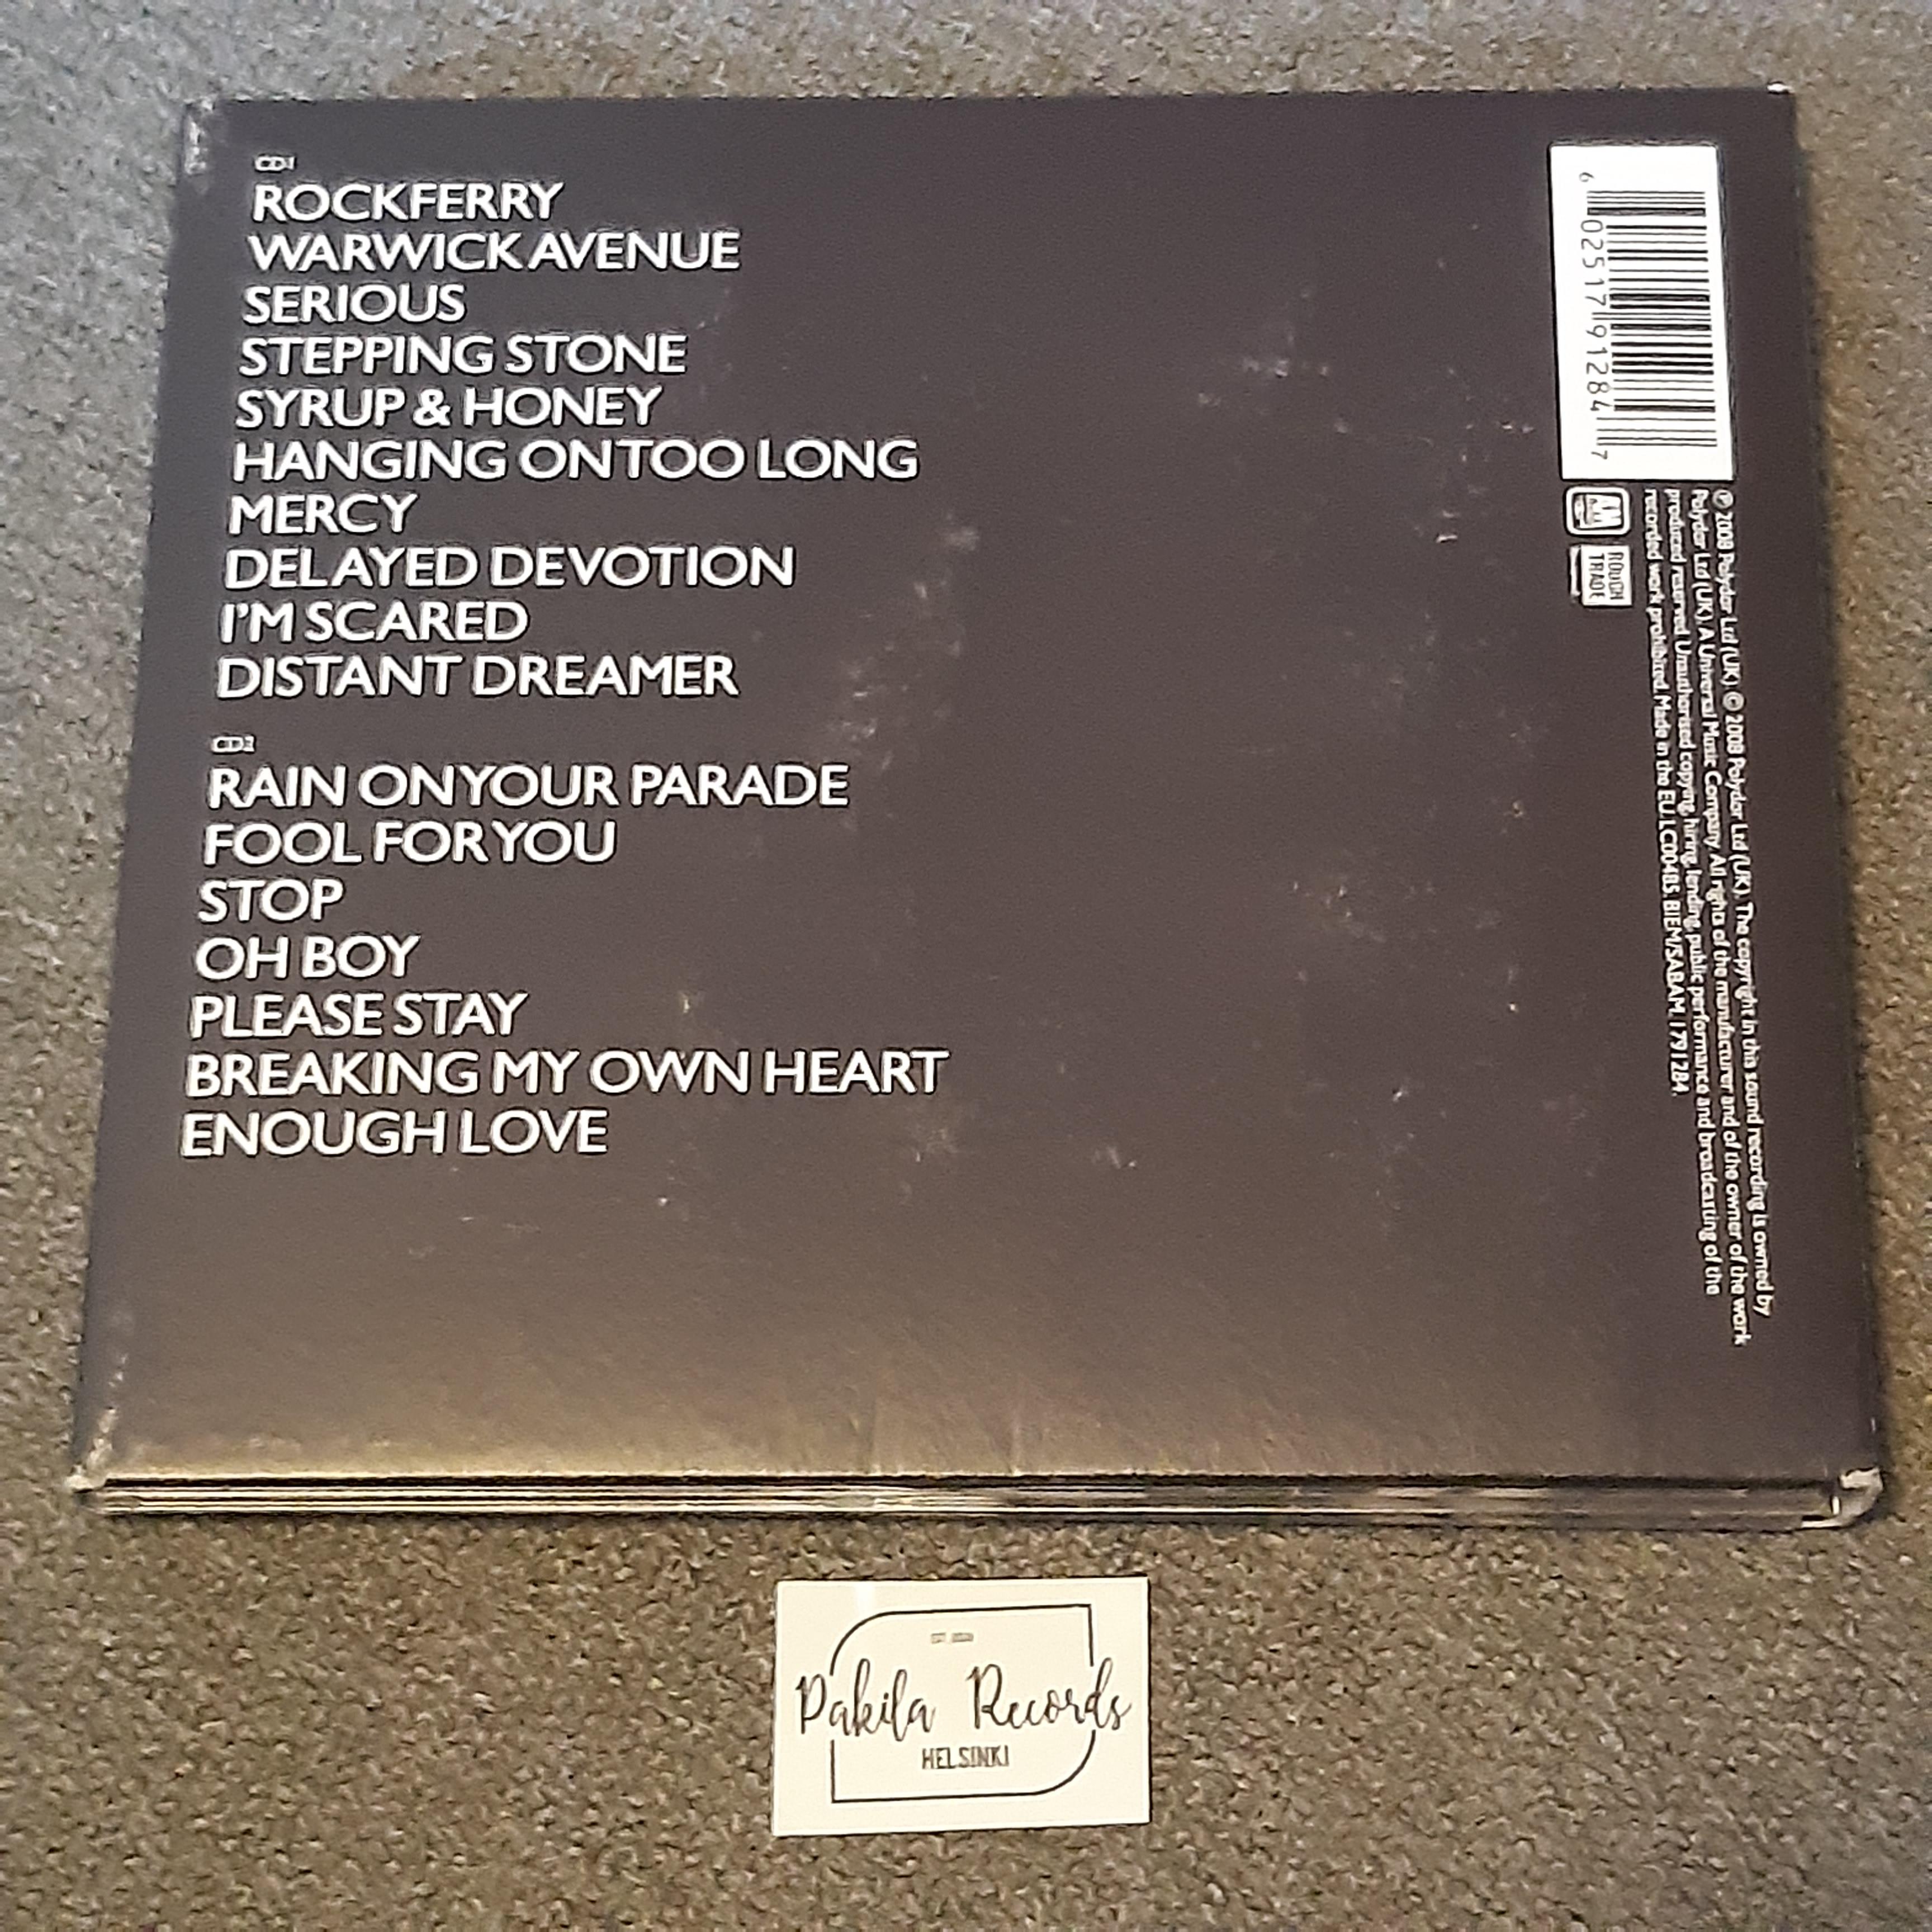 Duffy - Rockferry, Deluxe Ed. - 2 CD (käytetty)